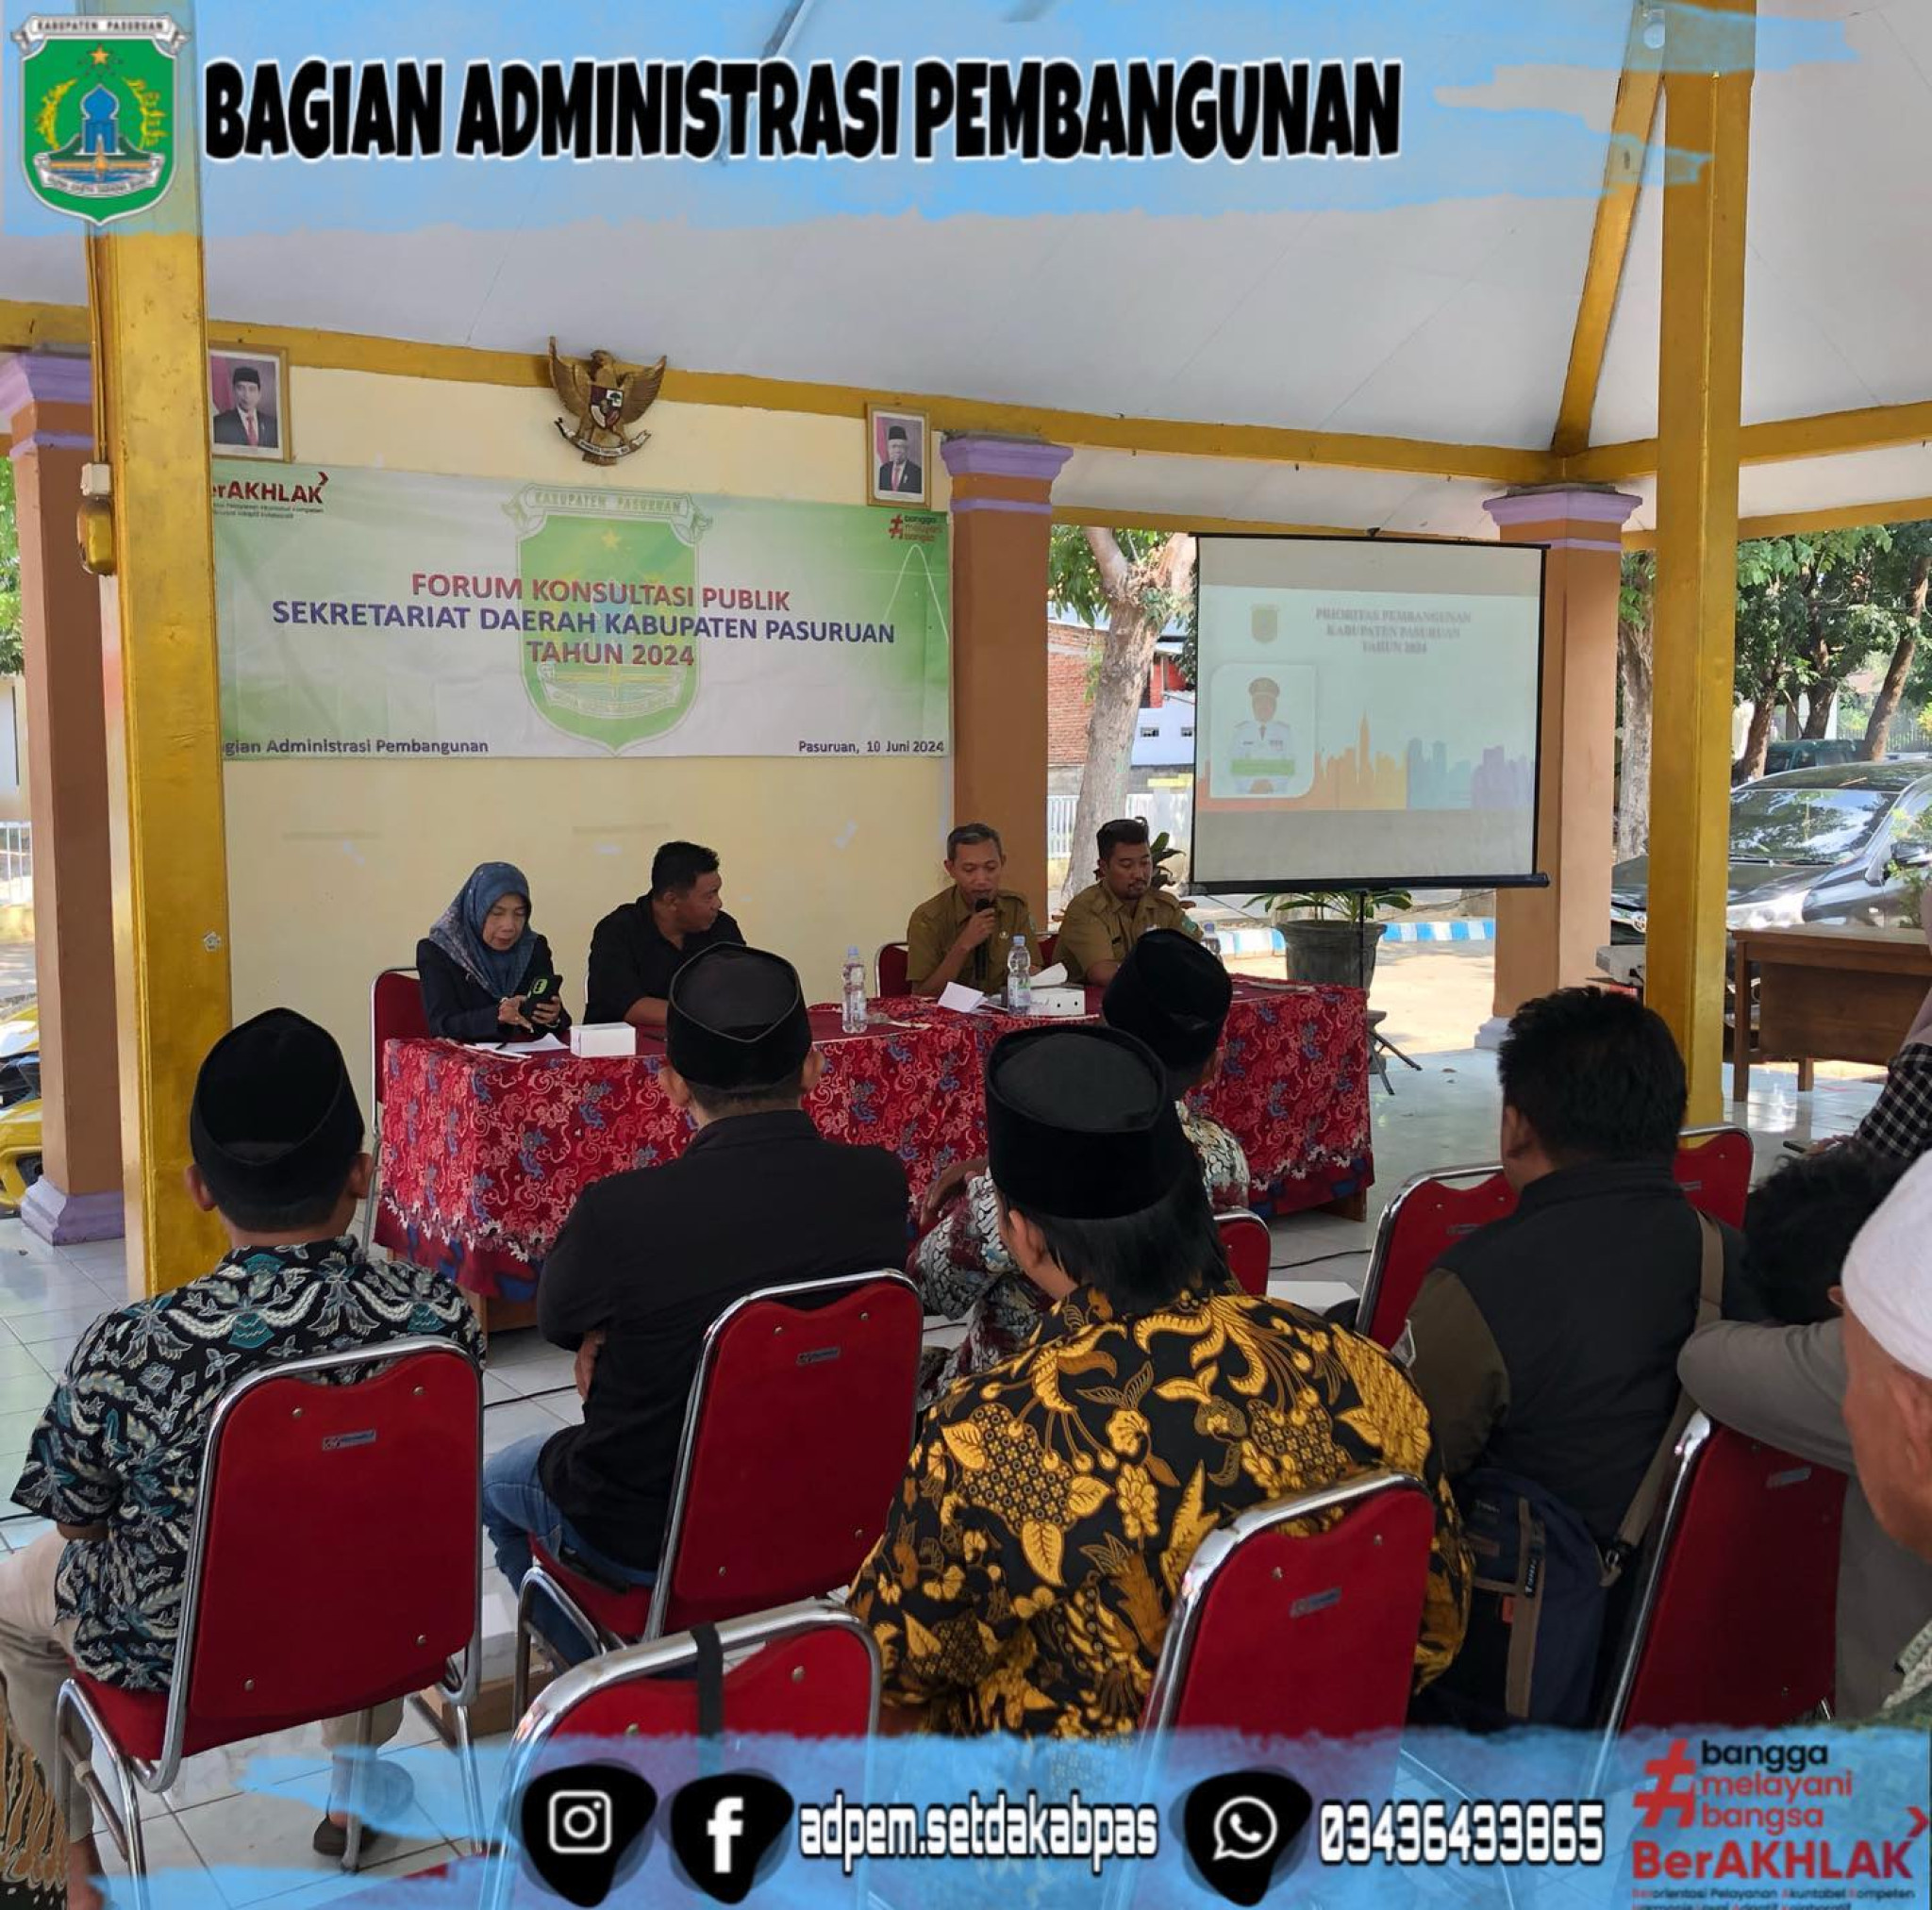 Forum Konsultasi Publik Sekretariat Daerah Kabupaten Pasuruan Tahun 2024 Kecamatan Kejayan